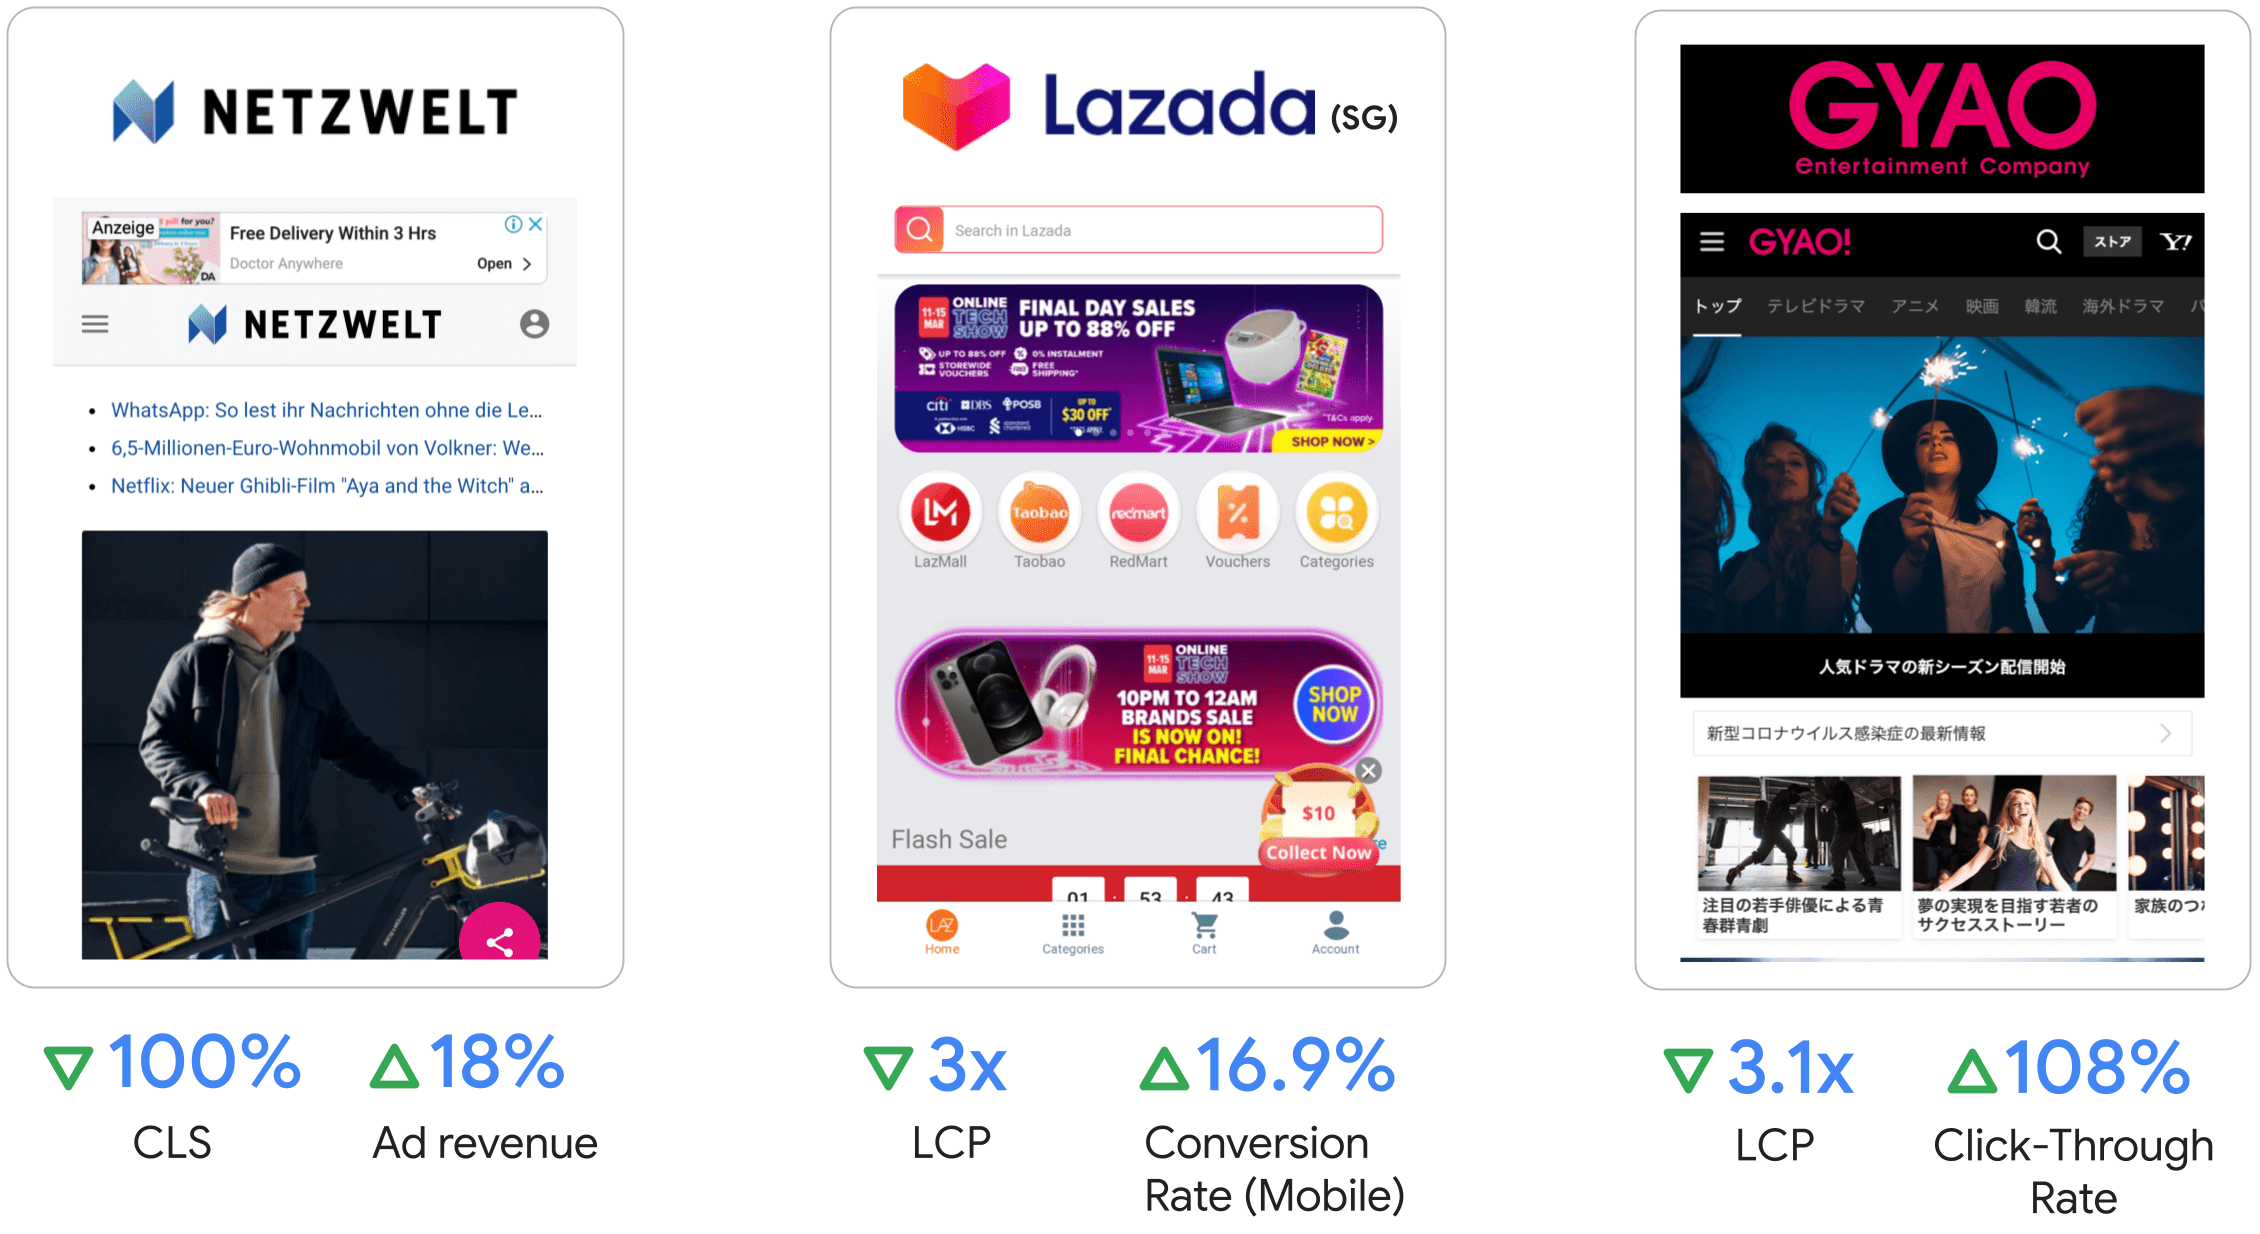 Netzwelt 的廣告收益提升了 18%、
Lazada 在行動裝置上的 LCP 提升 3 倍和 16.9% 的轉換率
GYAO 的 LCP 為 3.1 倍，點閱率也提升 108%